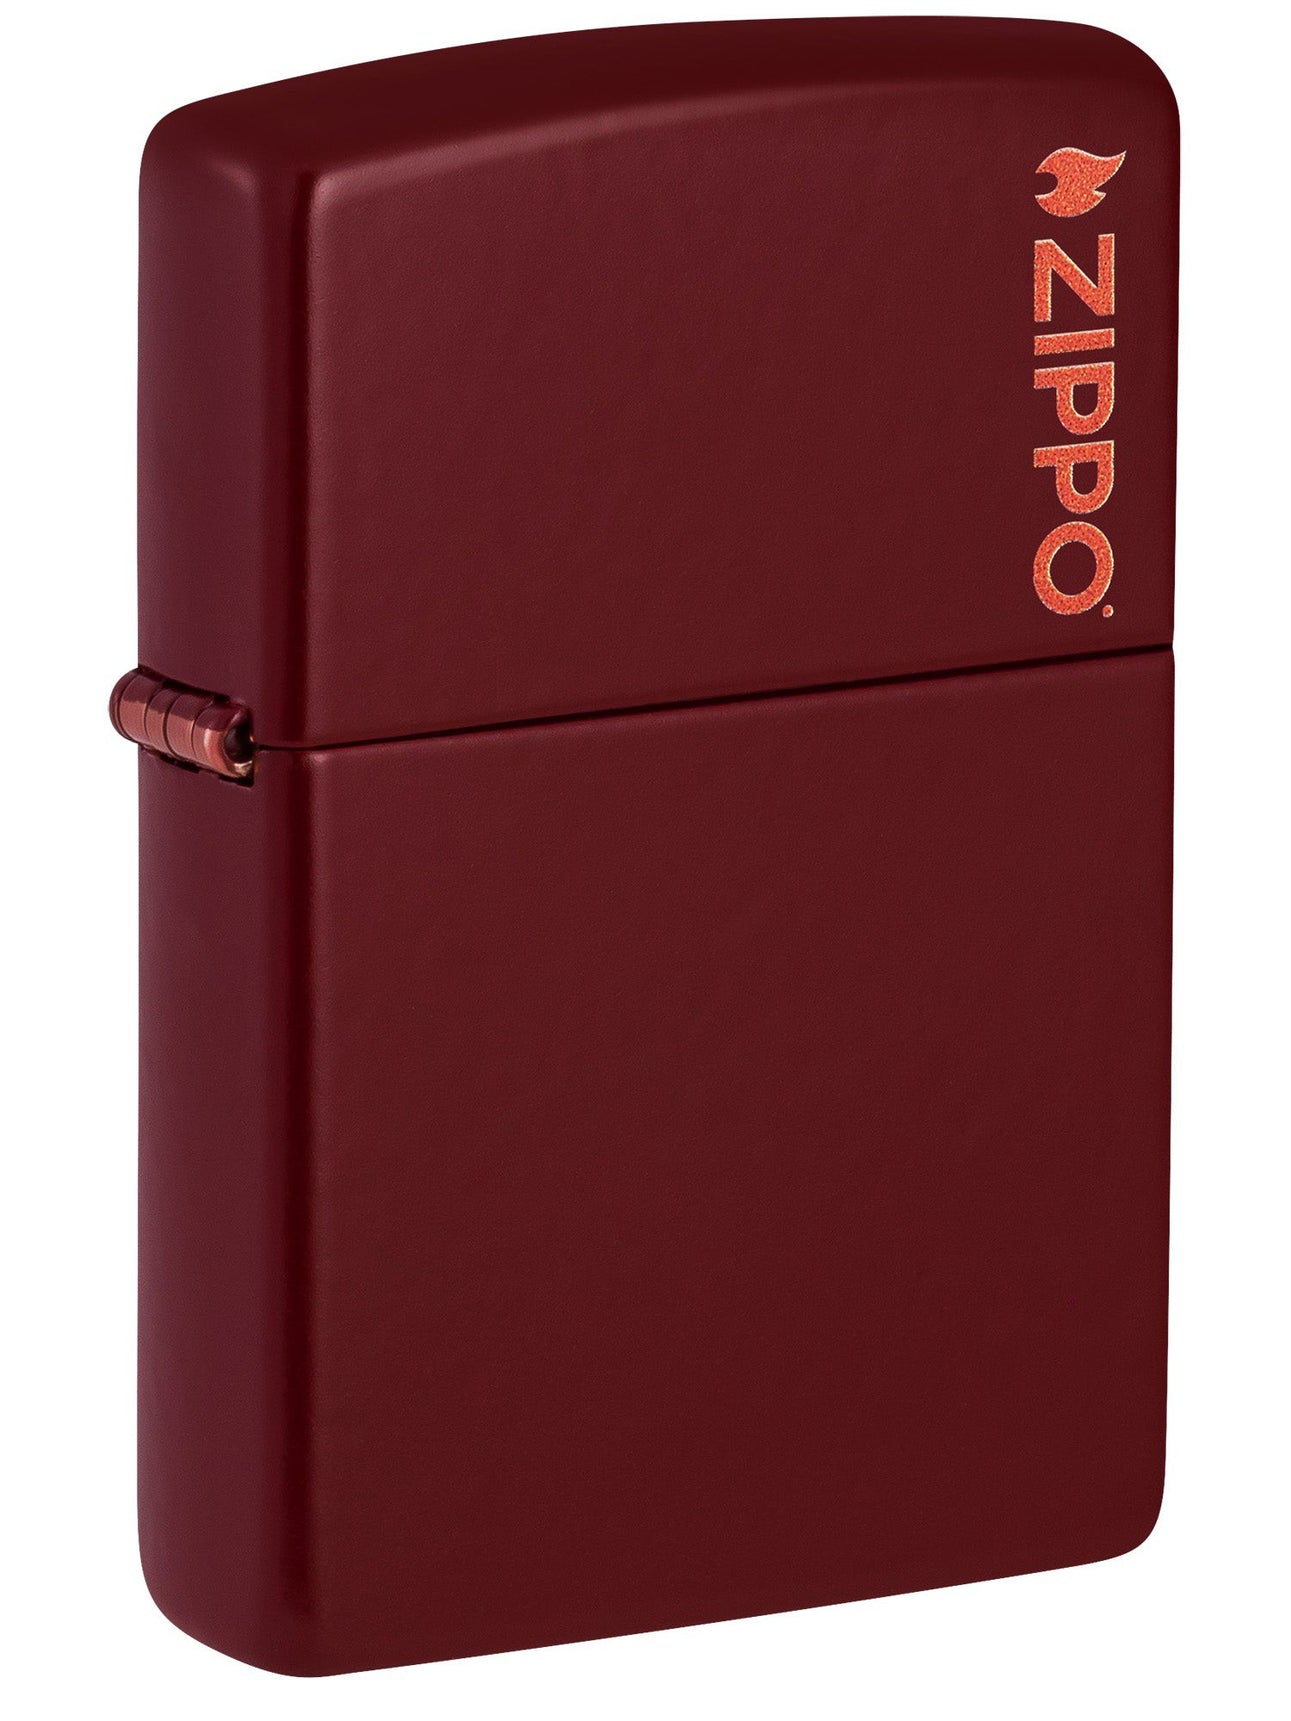 Zippo Lighter: Merlot with Zippo Logo - 46021ZL